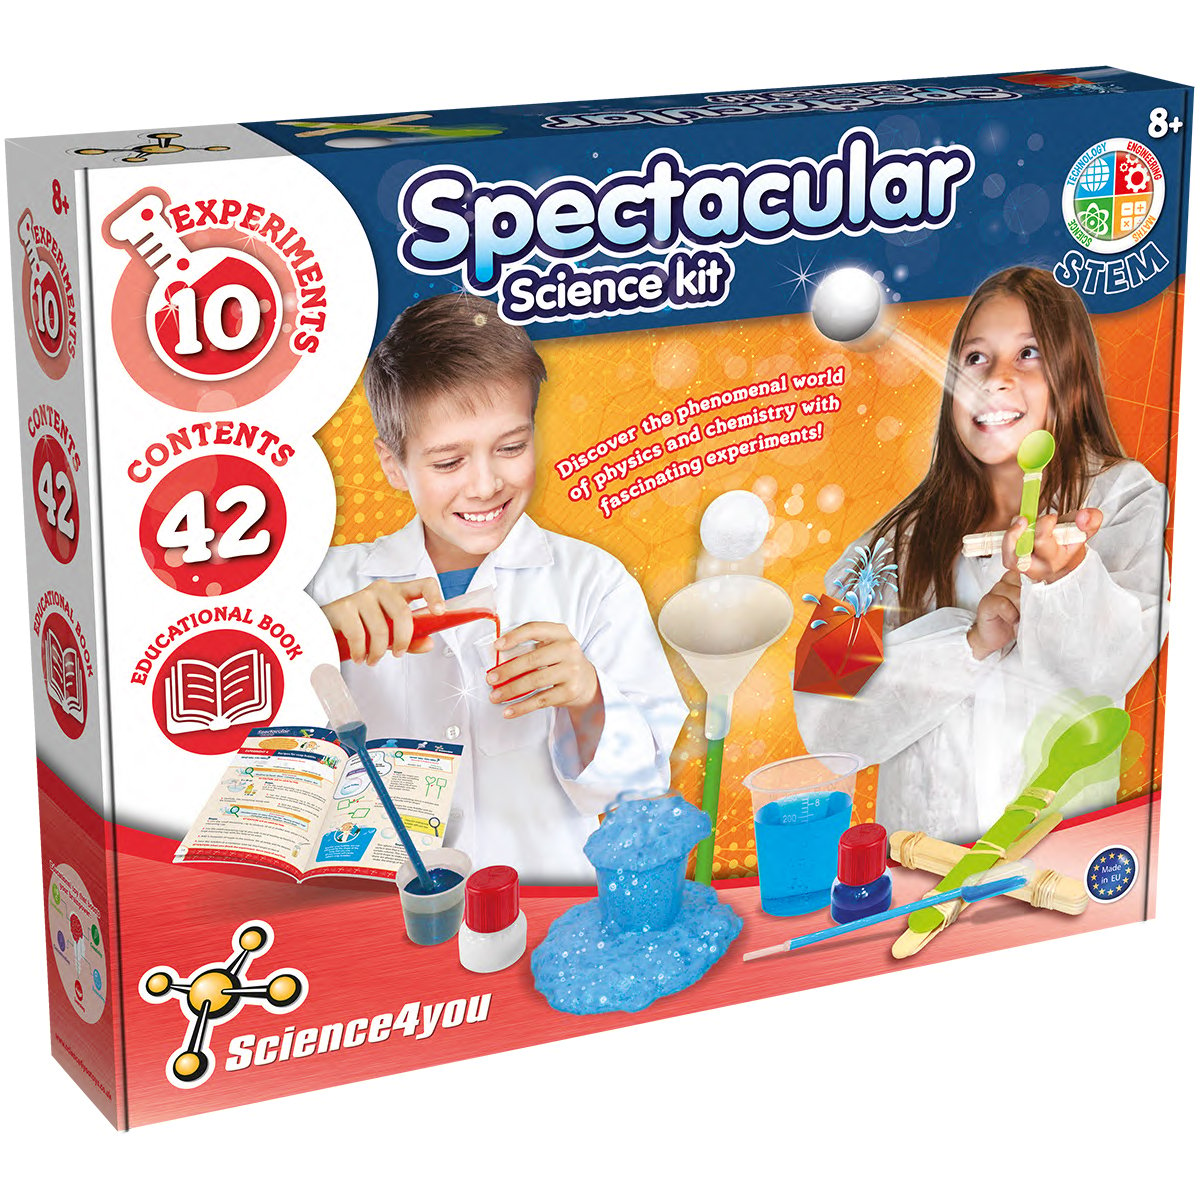 Set de experimente Science4You, Spectacular Science Kit educative